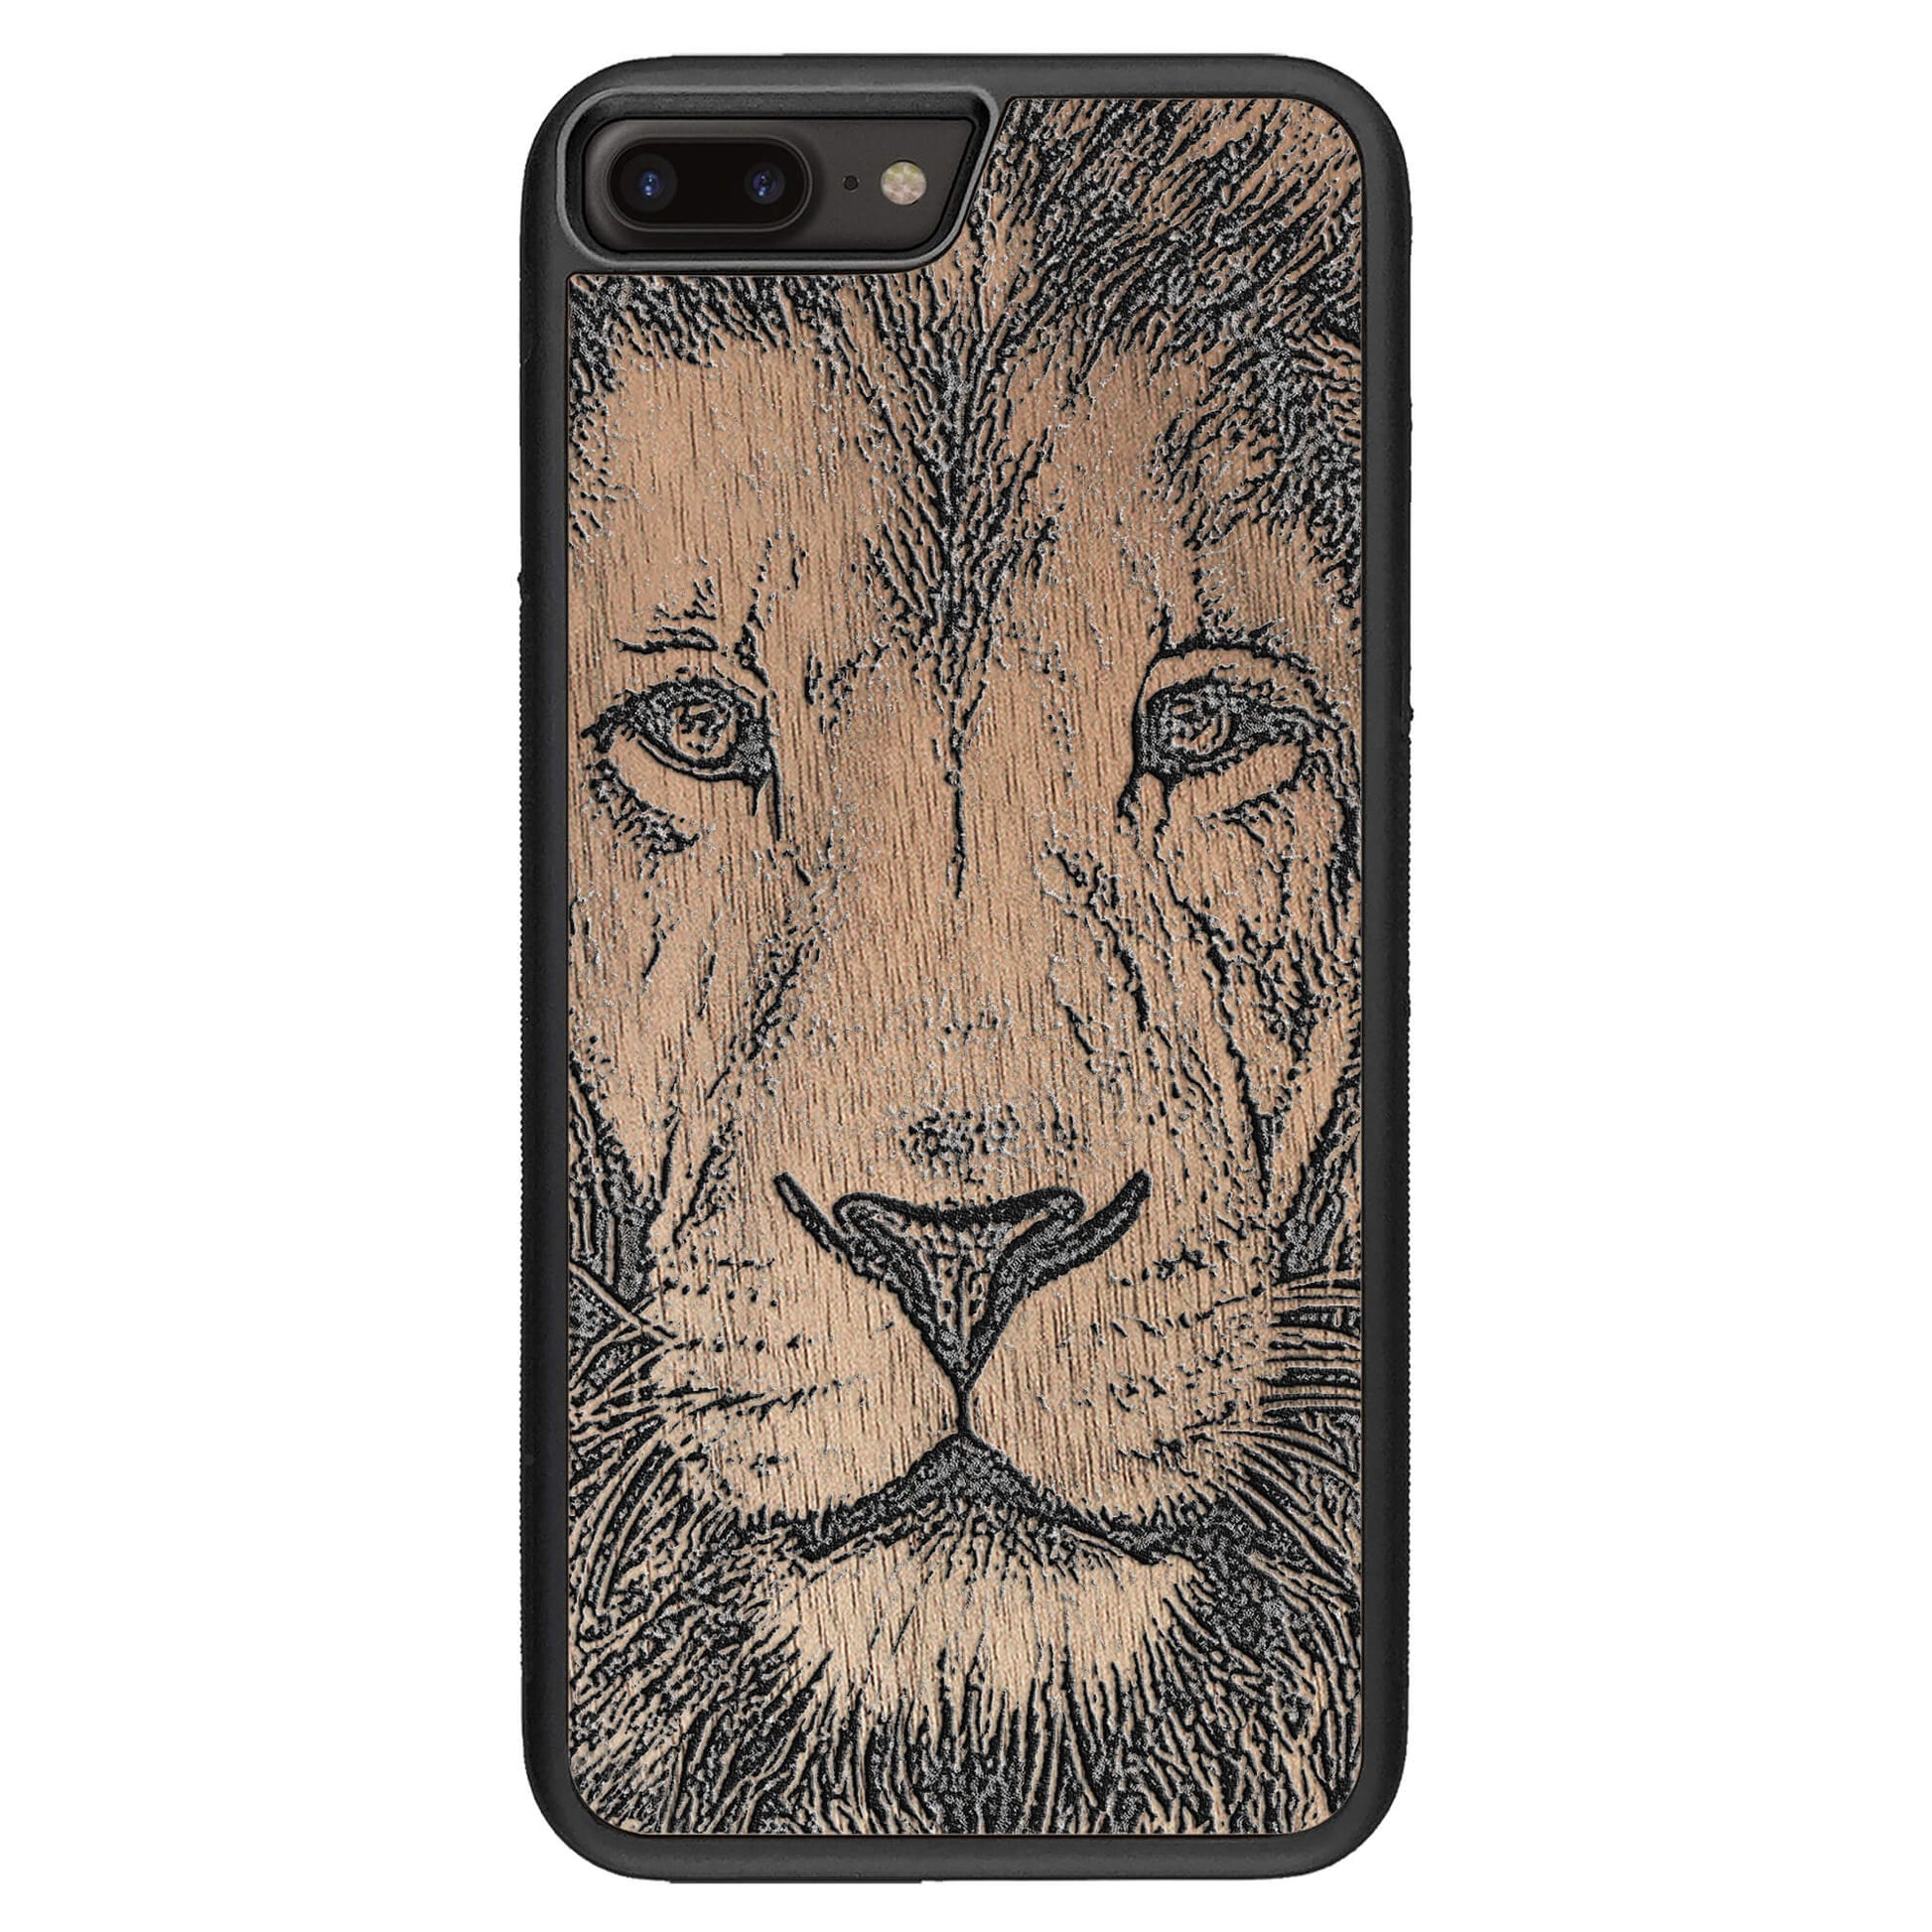 Wooden Case for iPhone 8 Plus Lion face